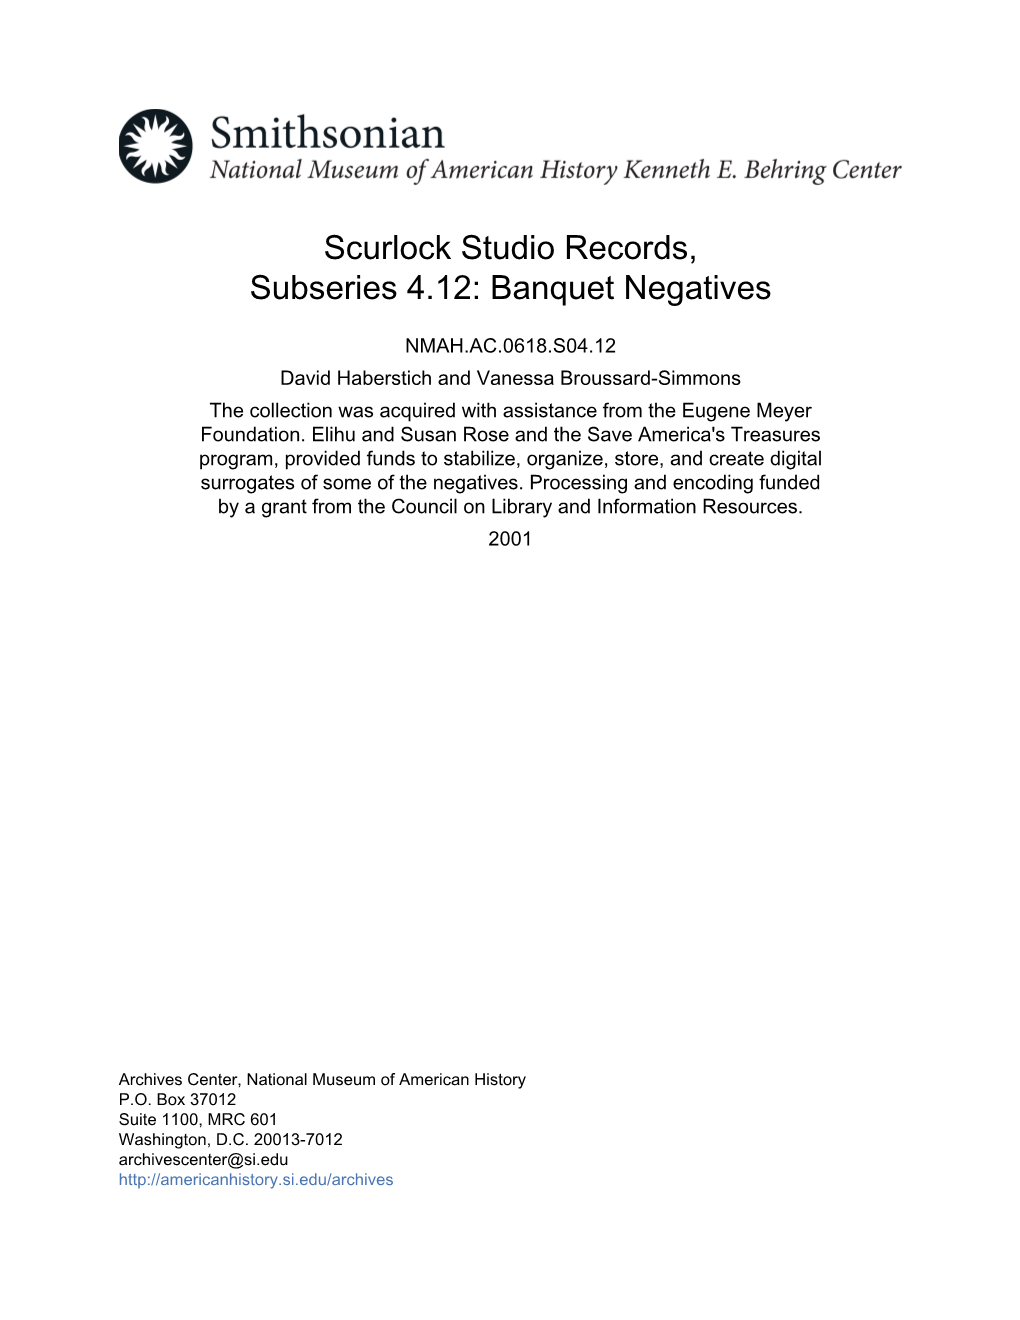 Scurlock Studio Records, Subseries 4.12: Banquet Negatives